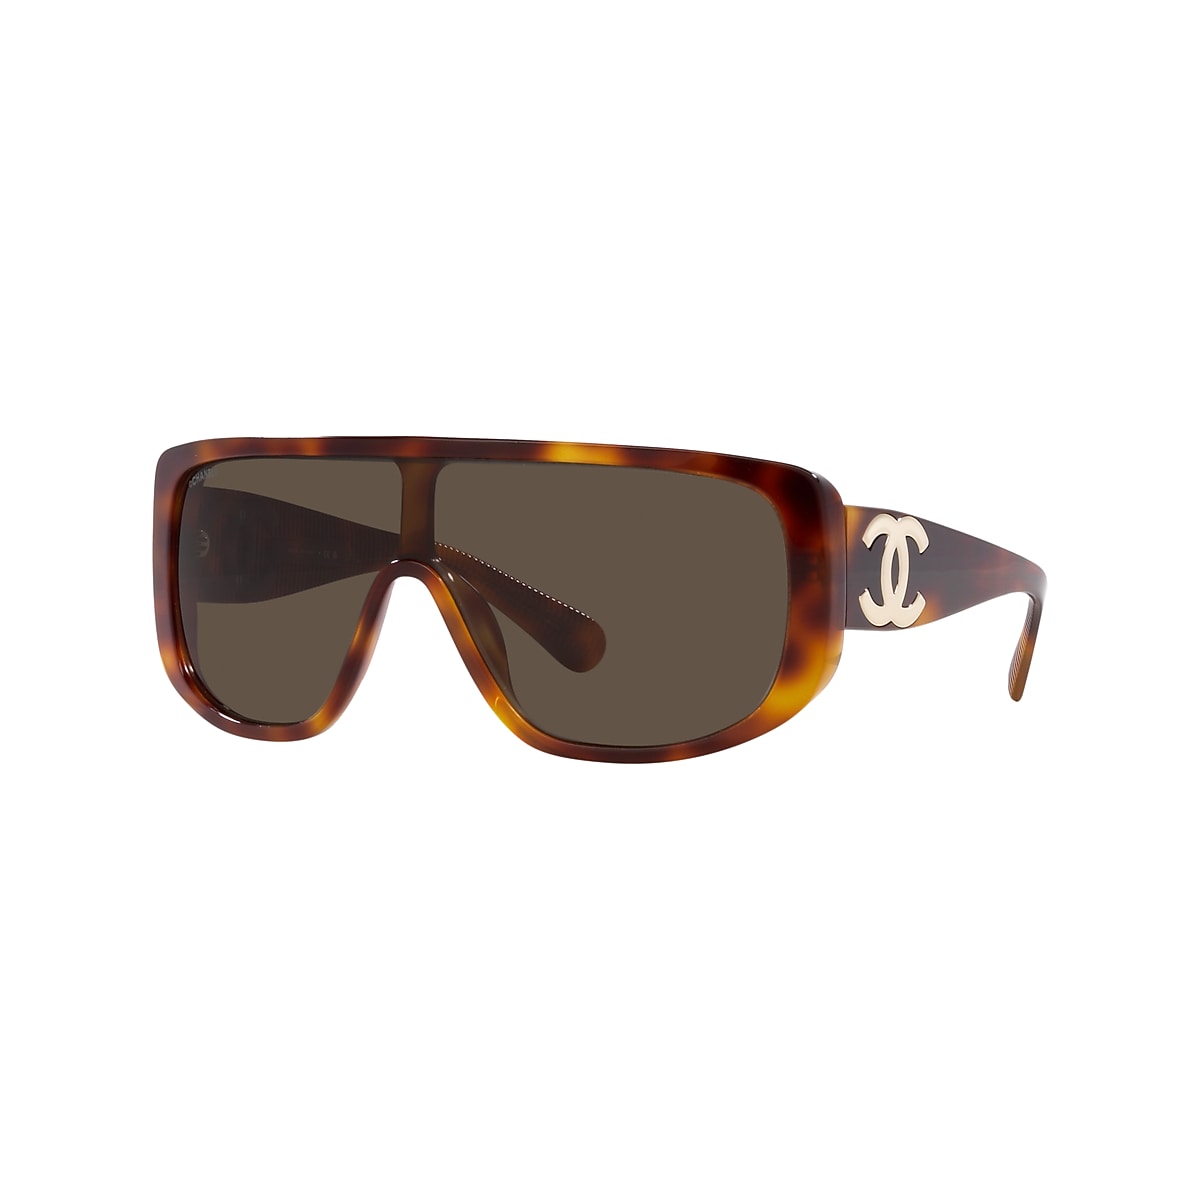 Chanel Shield Sunglasses CH5495 01 Brown & Dark Tortoise Sunglasses